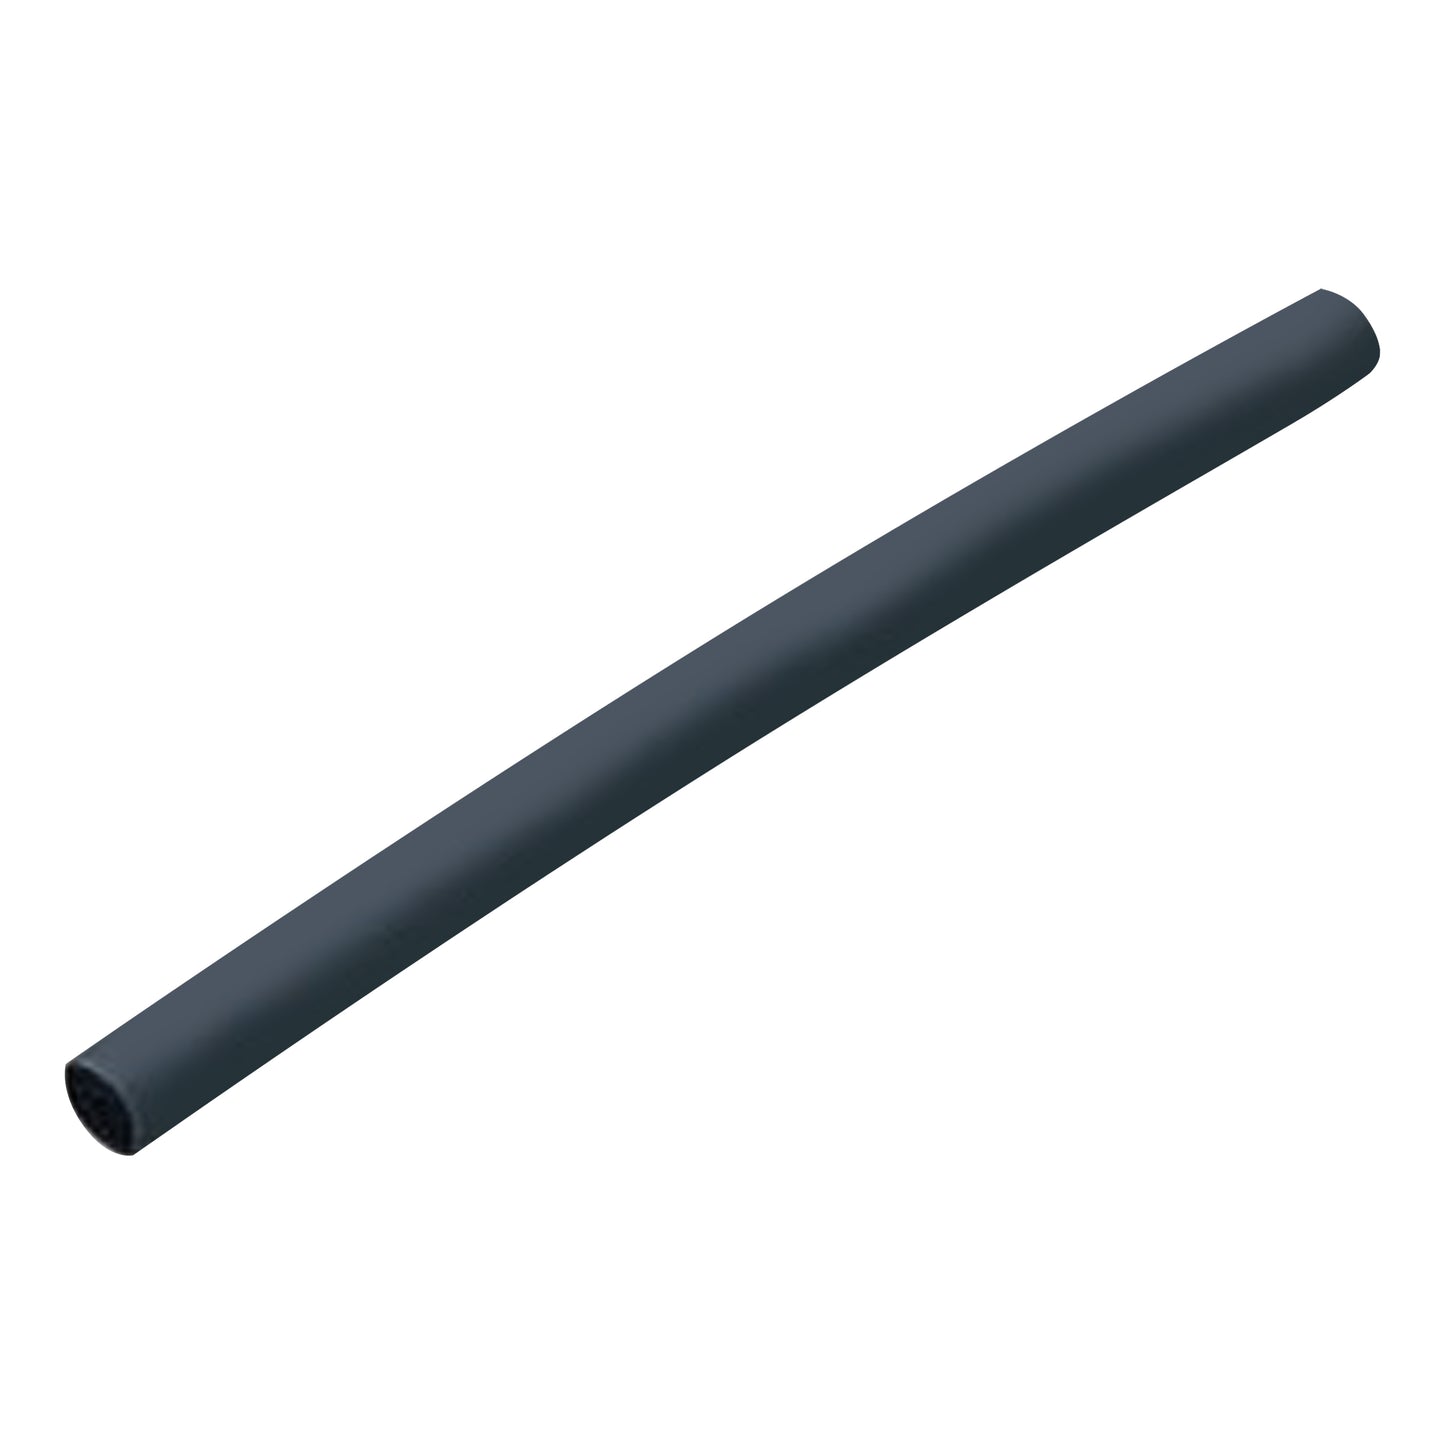 Flexible Thin Single Wall Non-Adhesive Heat Shrink Tubing 2:1 Black 2" ID - 12" Inch 10 Pack